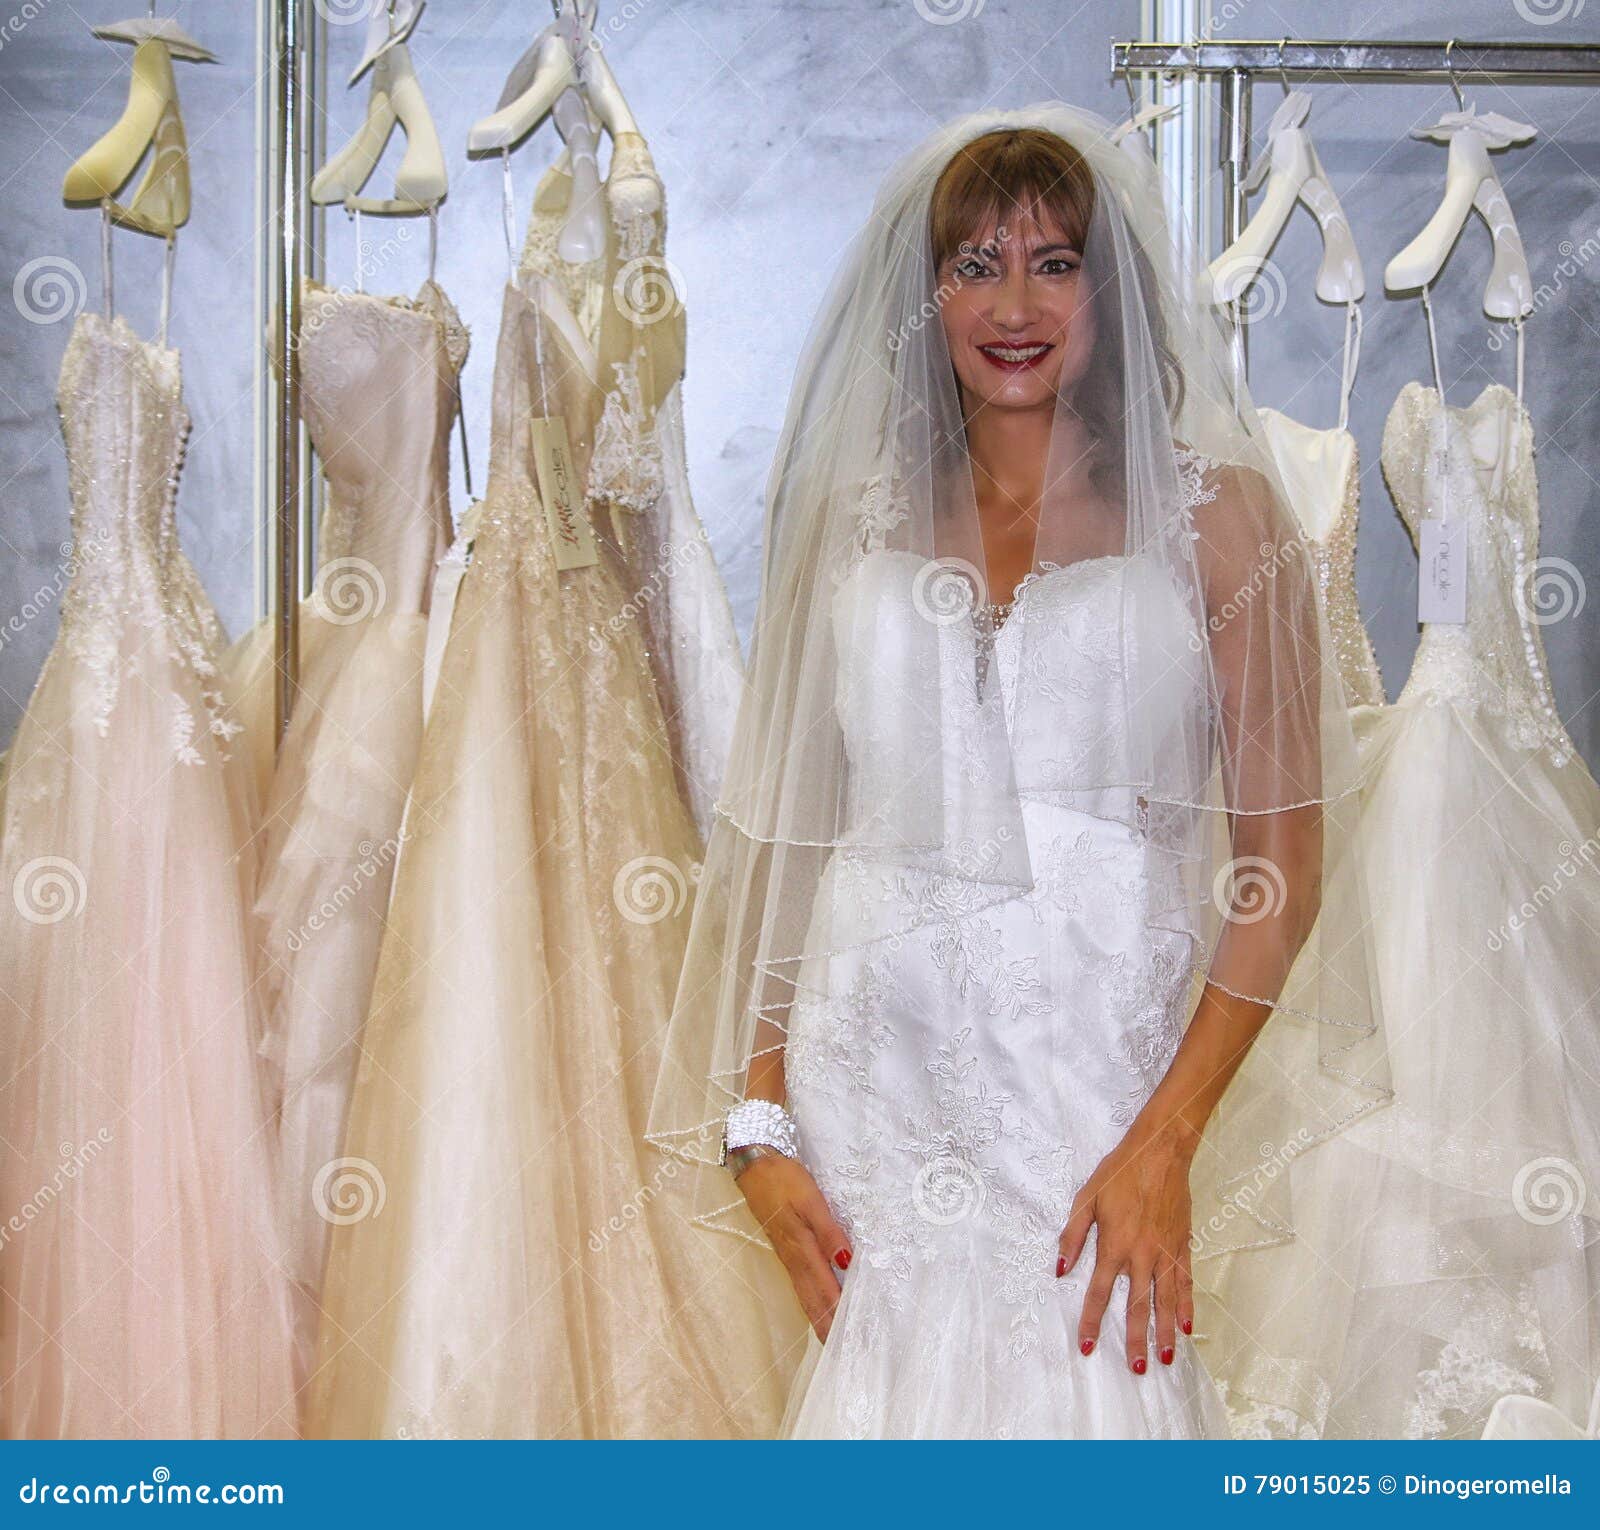 Vladimir Luxuria Dressing As A Bride Editorial Image Image Of Activist Ceremony